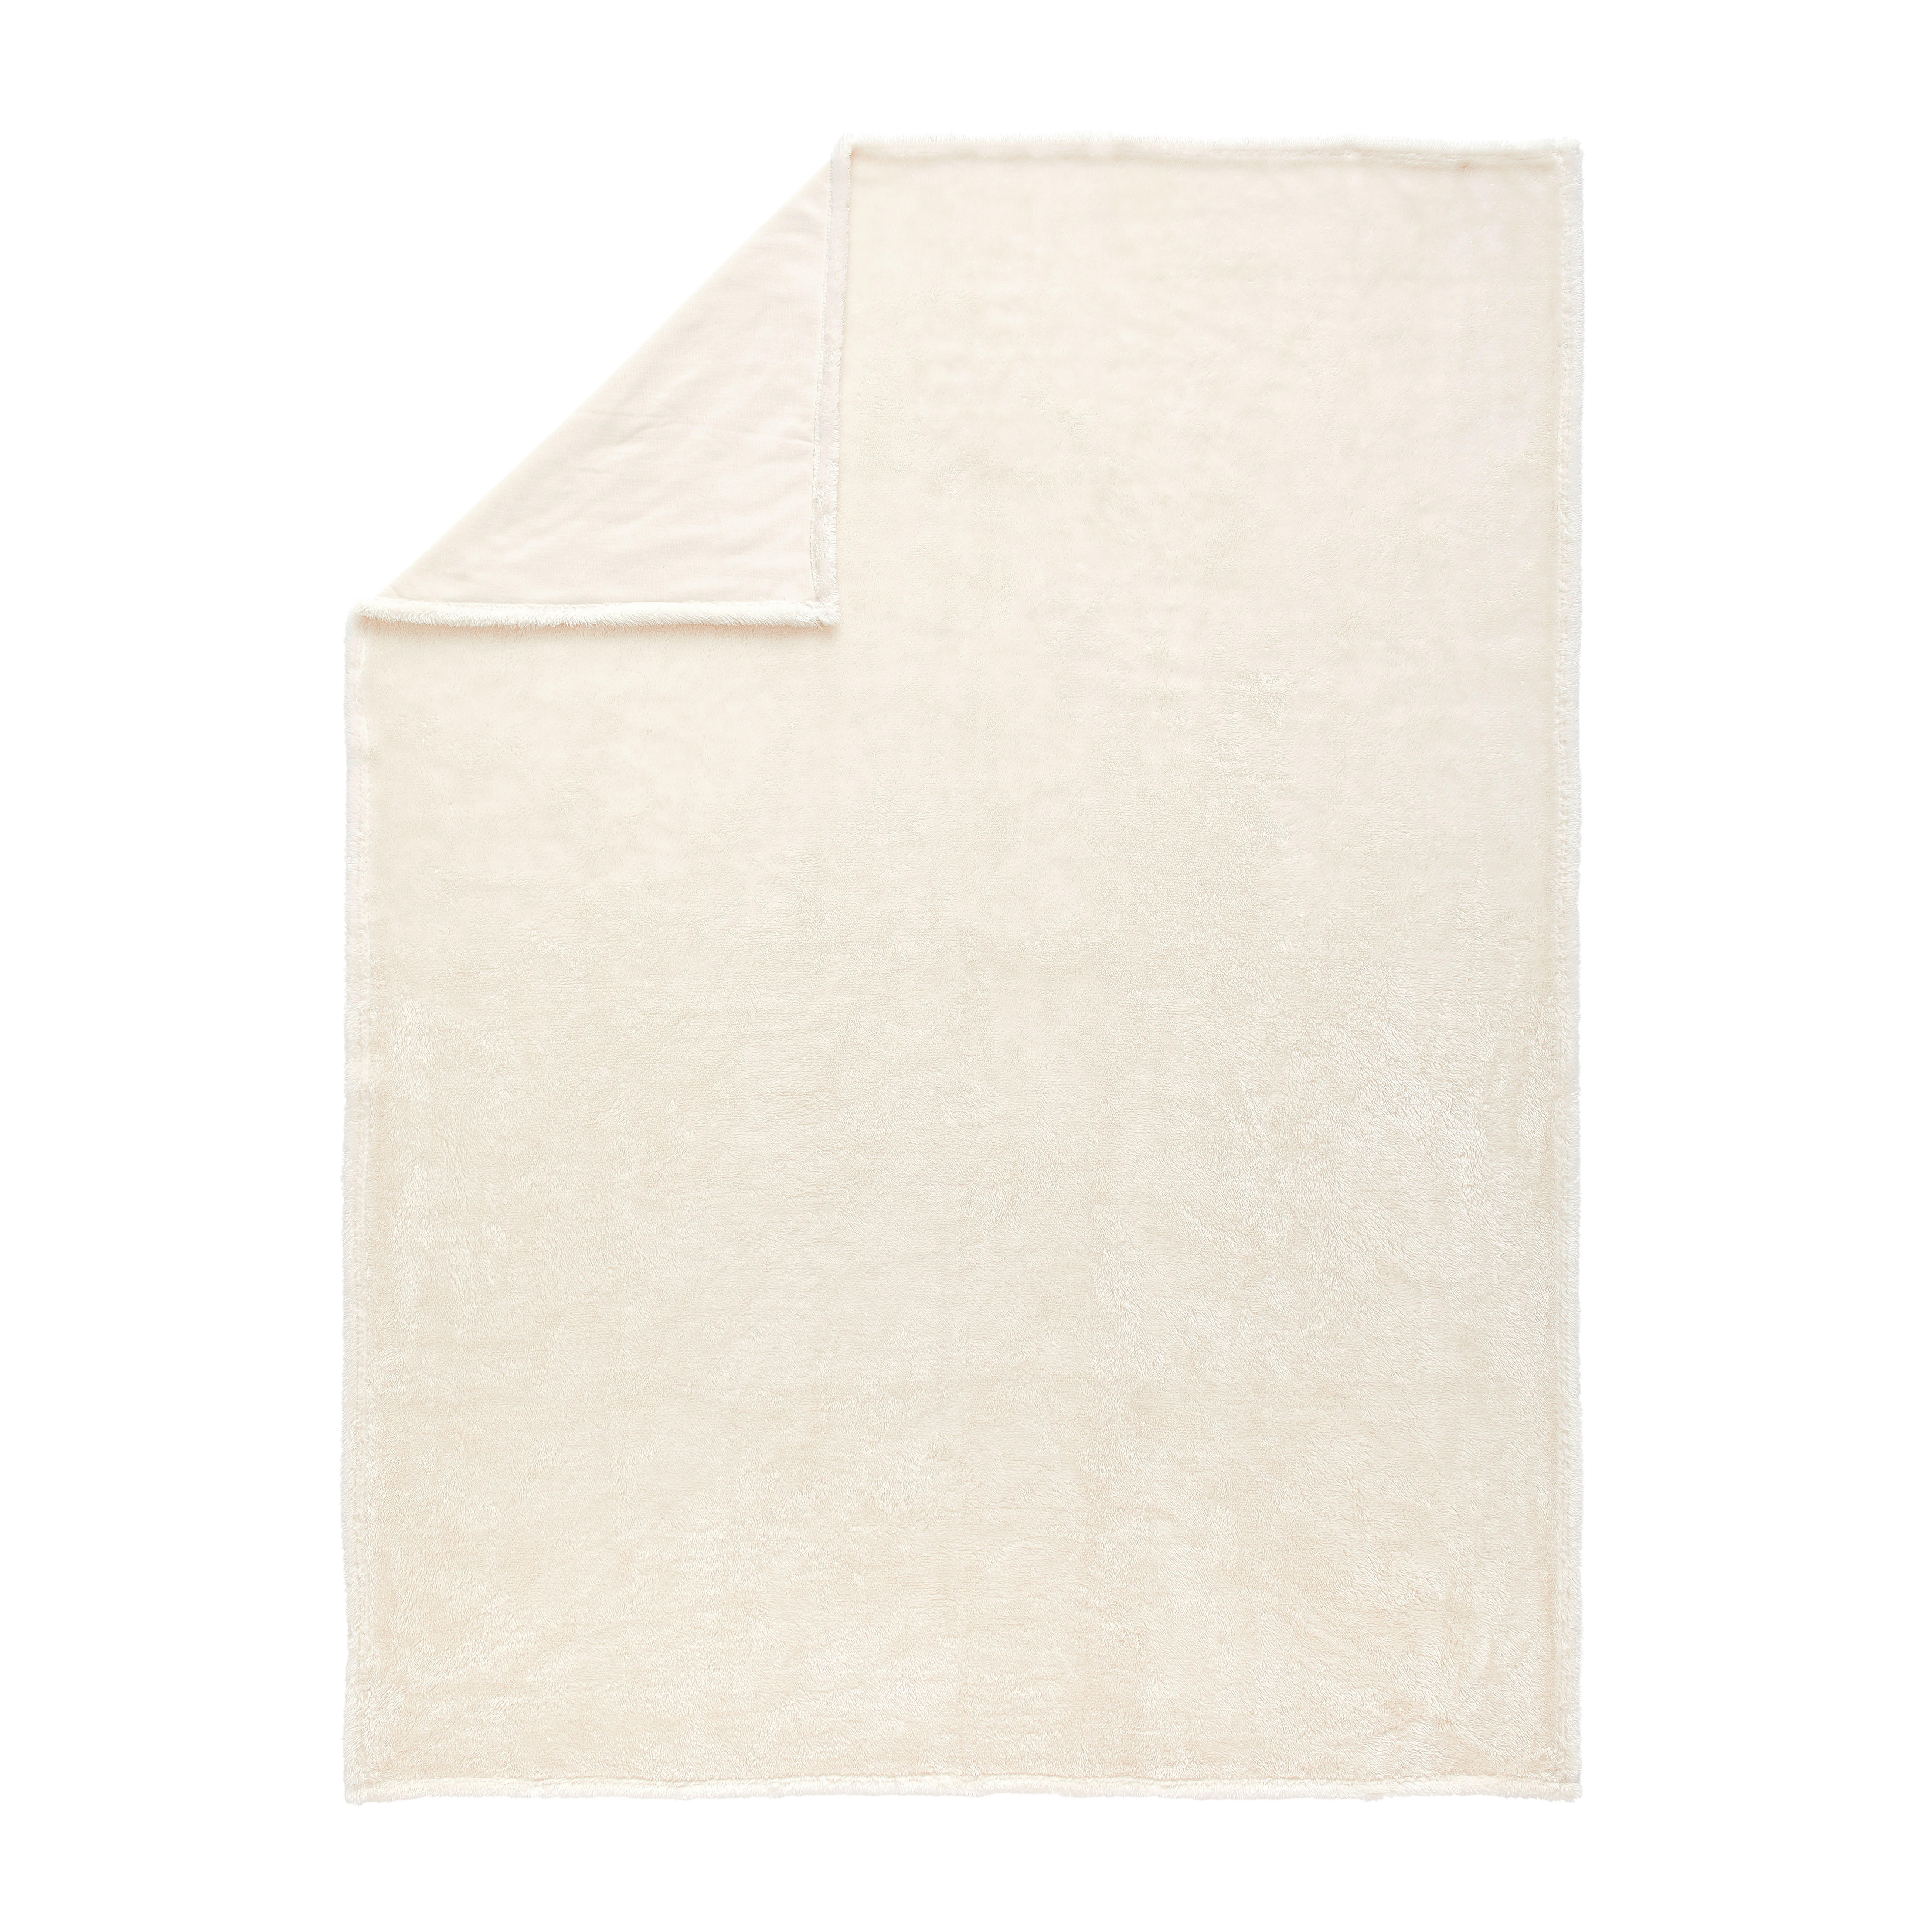 FELLDECKE Moraine 150/200 cm  - Weiß, KONVENTIONELL, Textil (150/200cm) - Novel